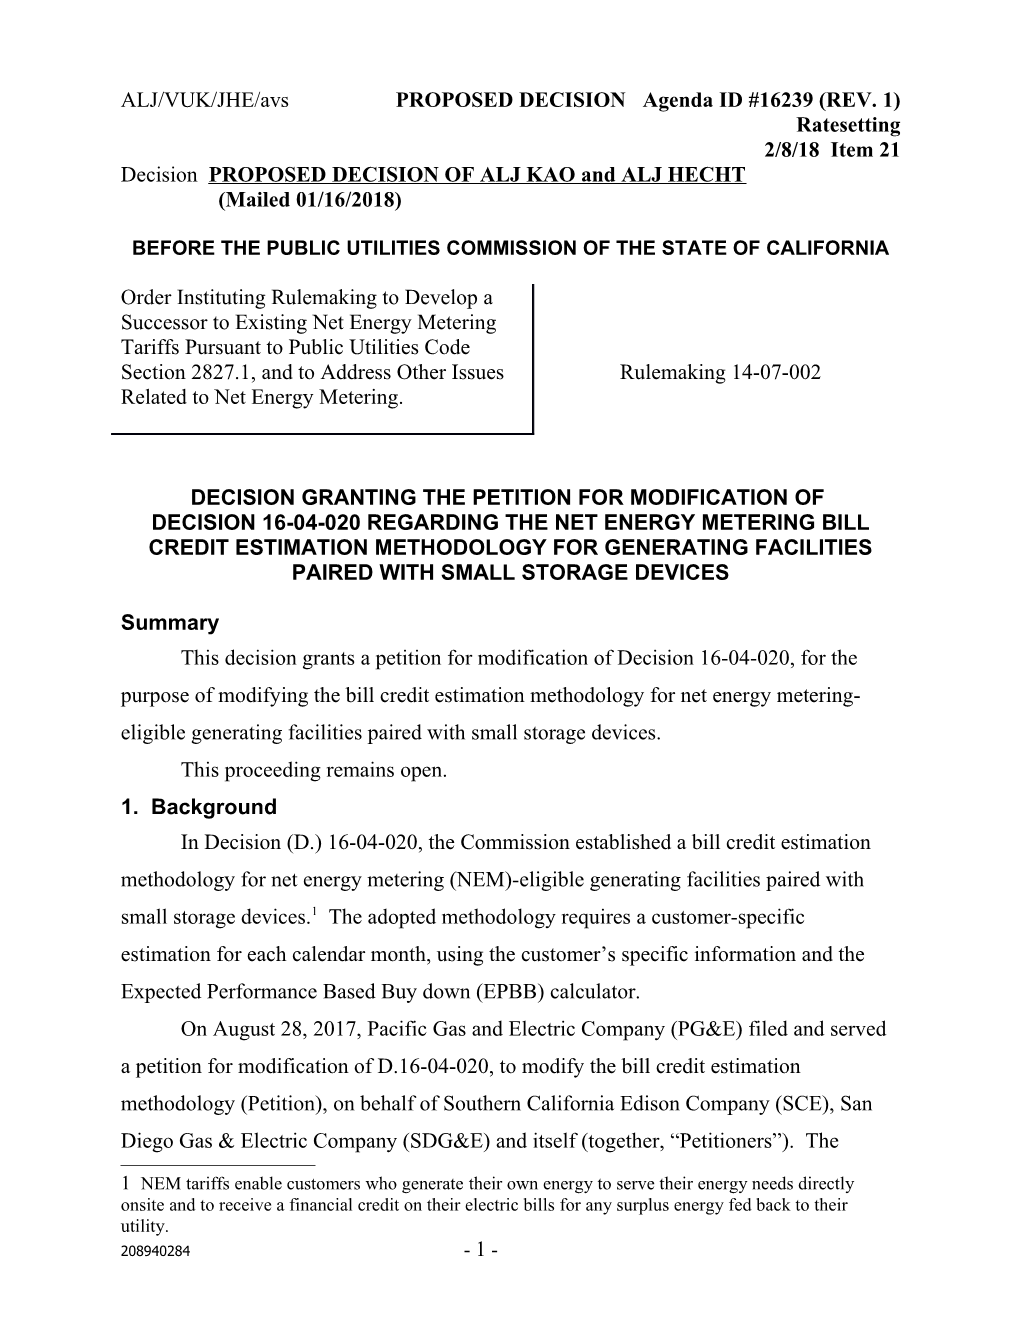 R.14-07-002 ALJ/VUK/JHE/Avs PROPOSED DECISION (REV. 1)